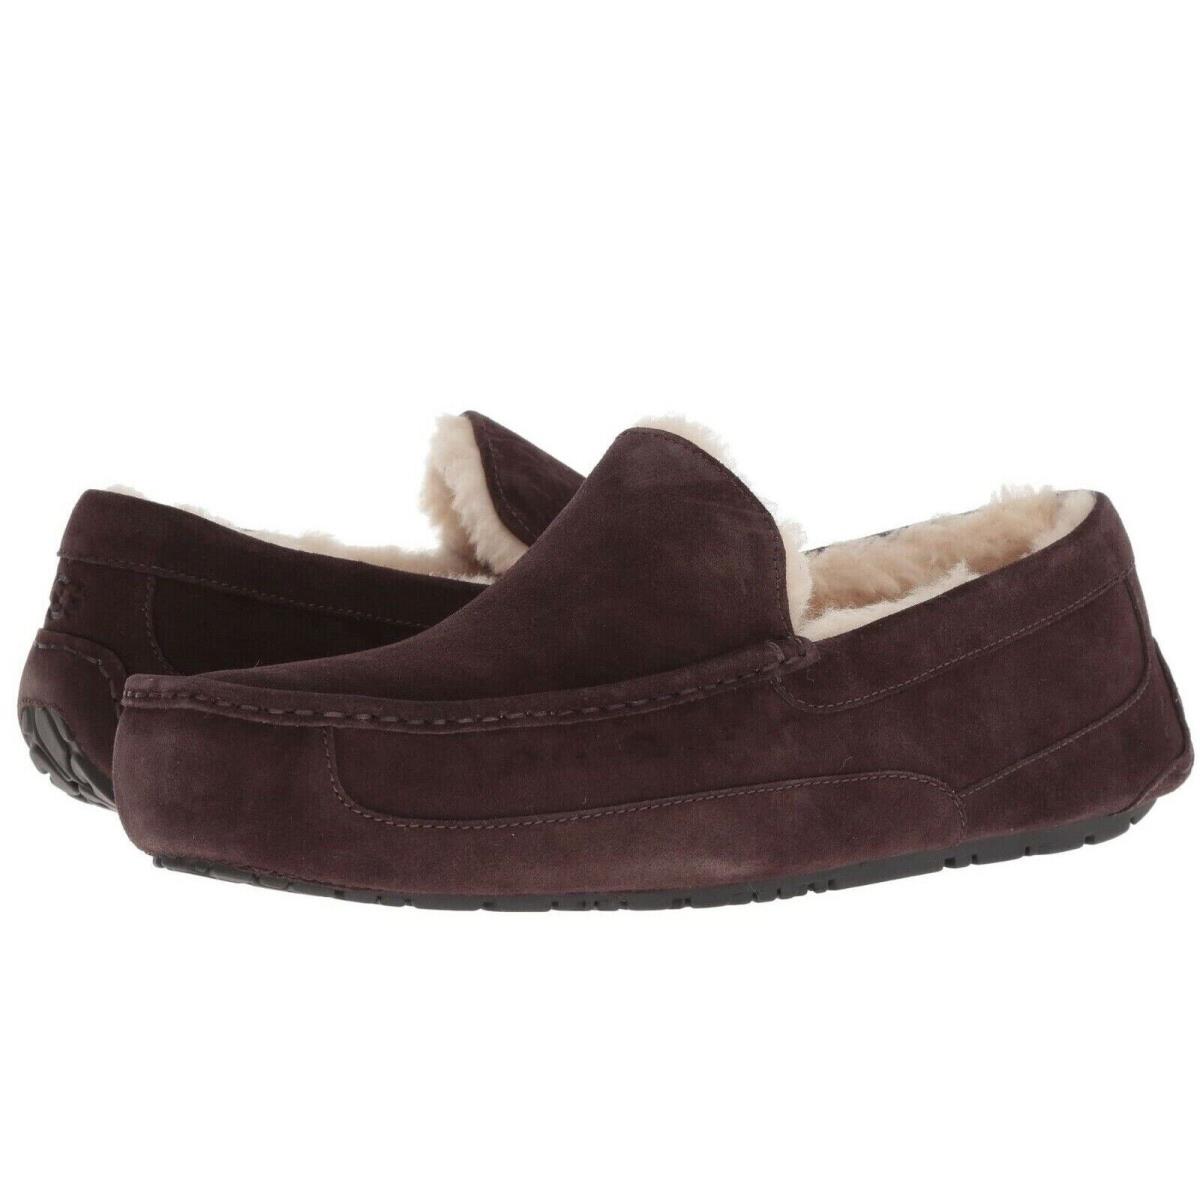 Ugg Ascot Men`s Slippers Sheepskin Suede Loafer Shoes 1101110 -espresso